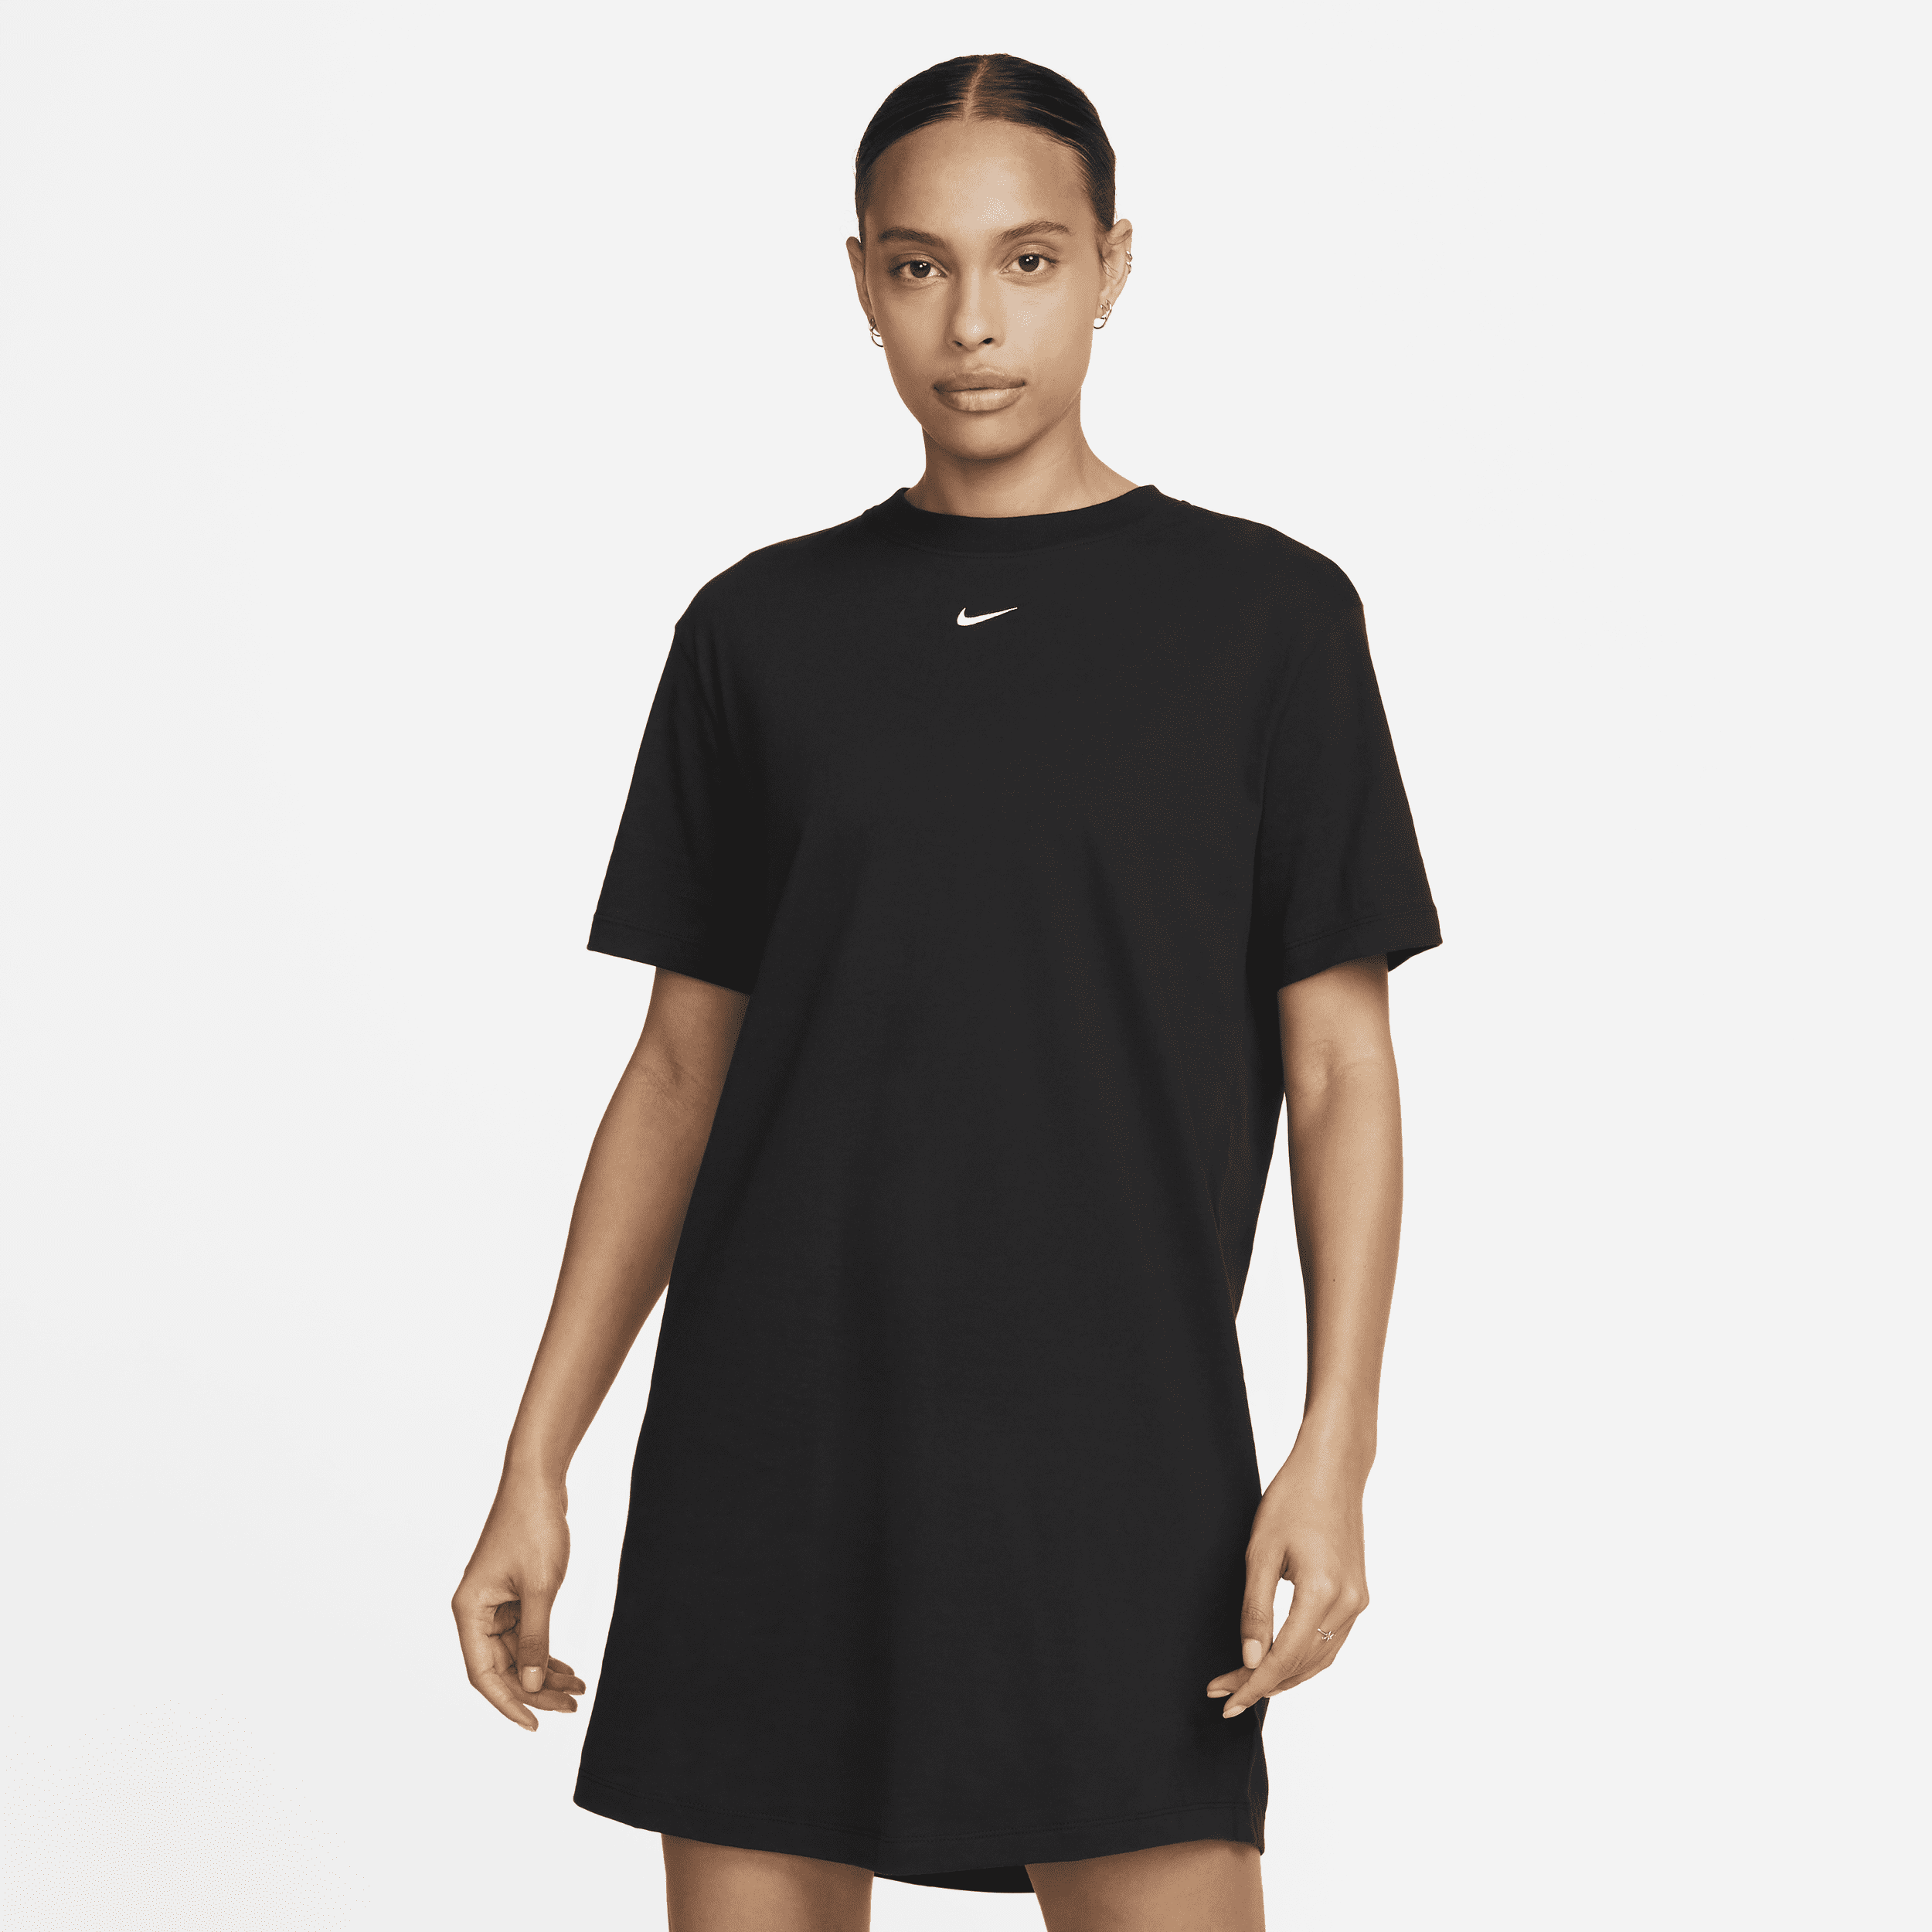 Oversized, maskinstrikket Nike Sportswear-T-shirt til kvinder - sort